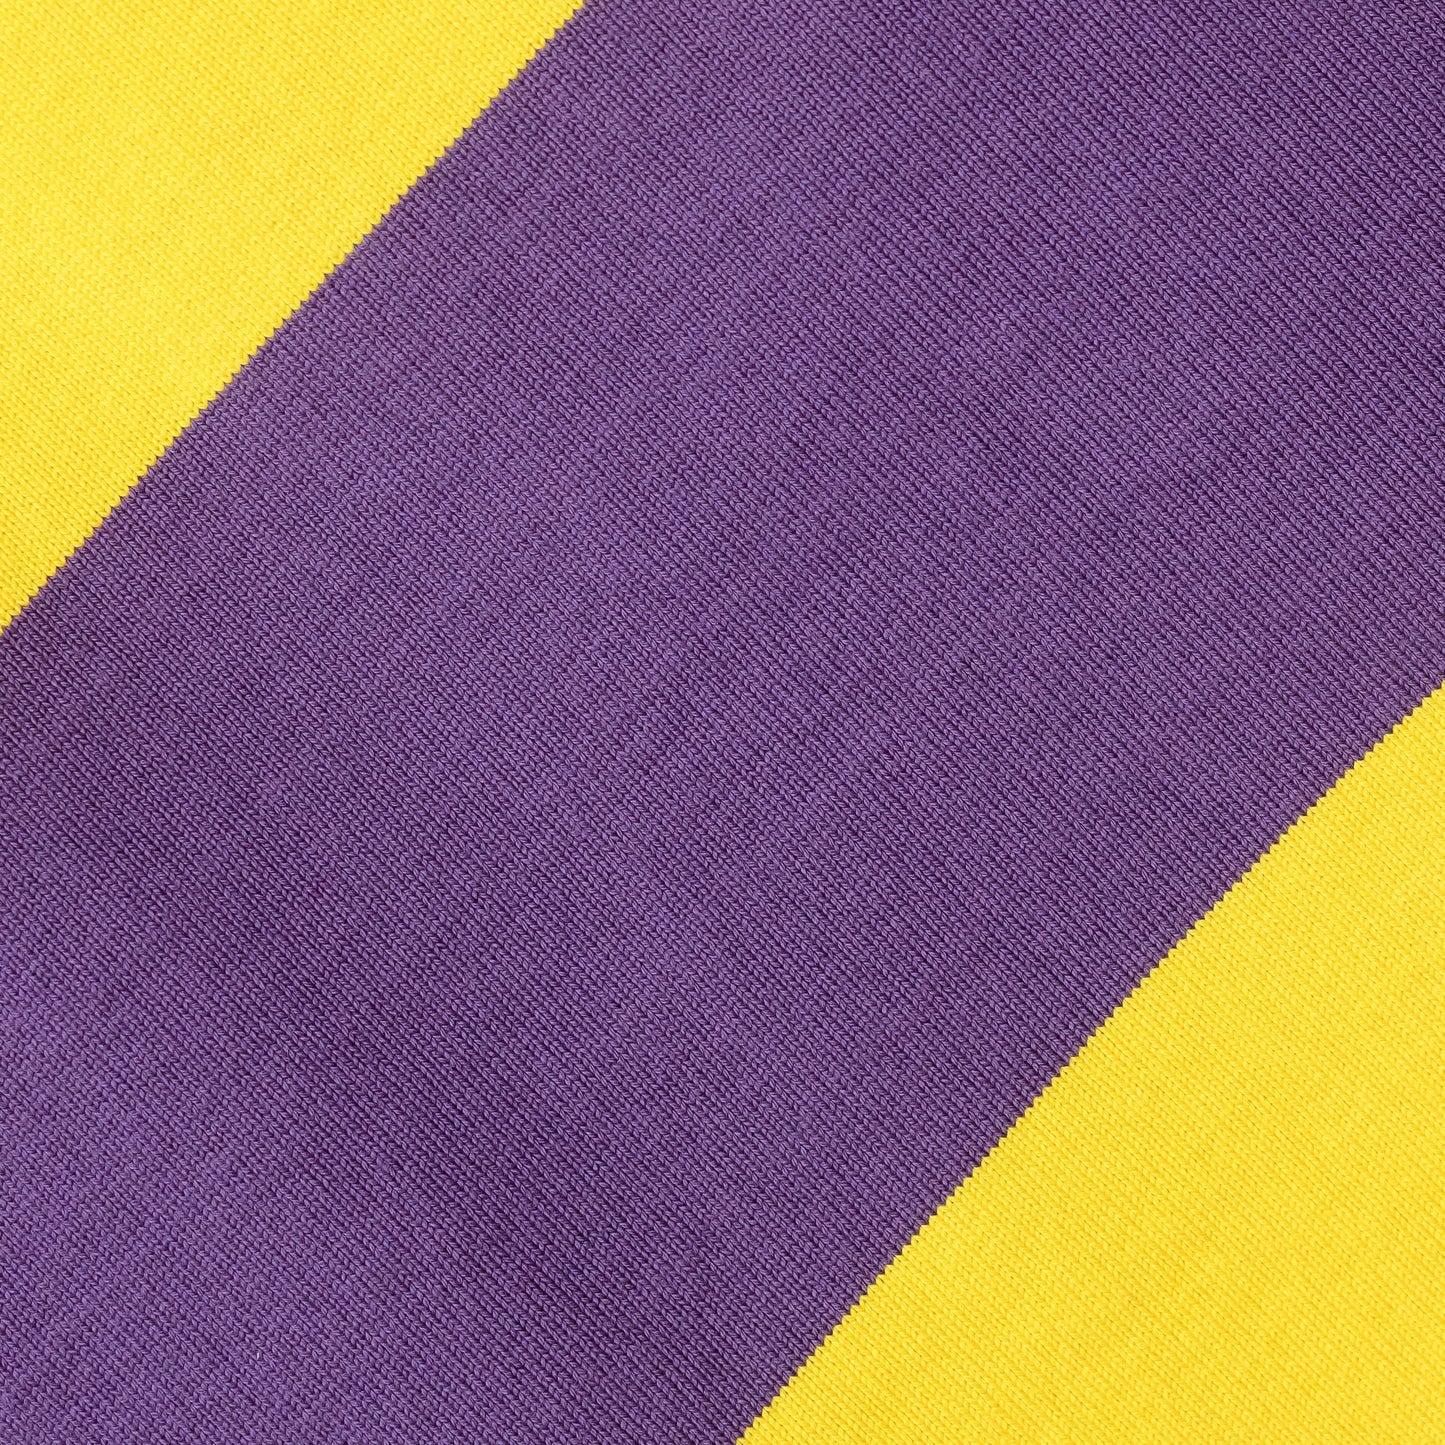 Purple and gold horizontal stripes. 